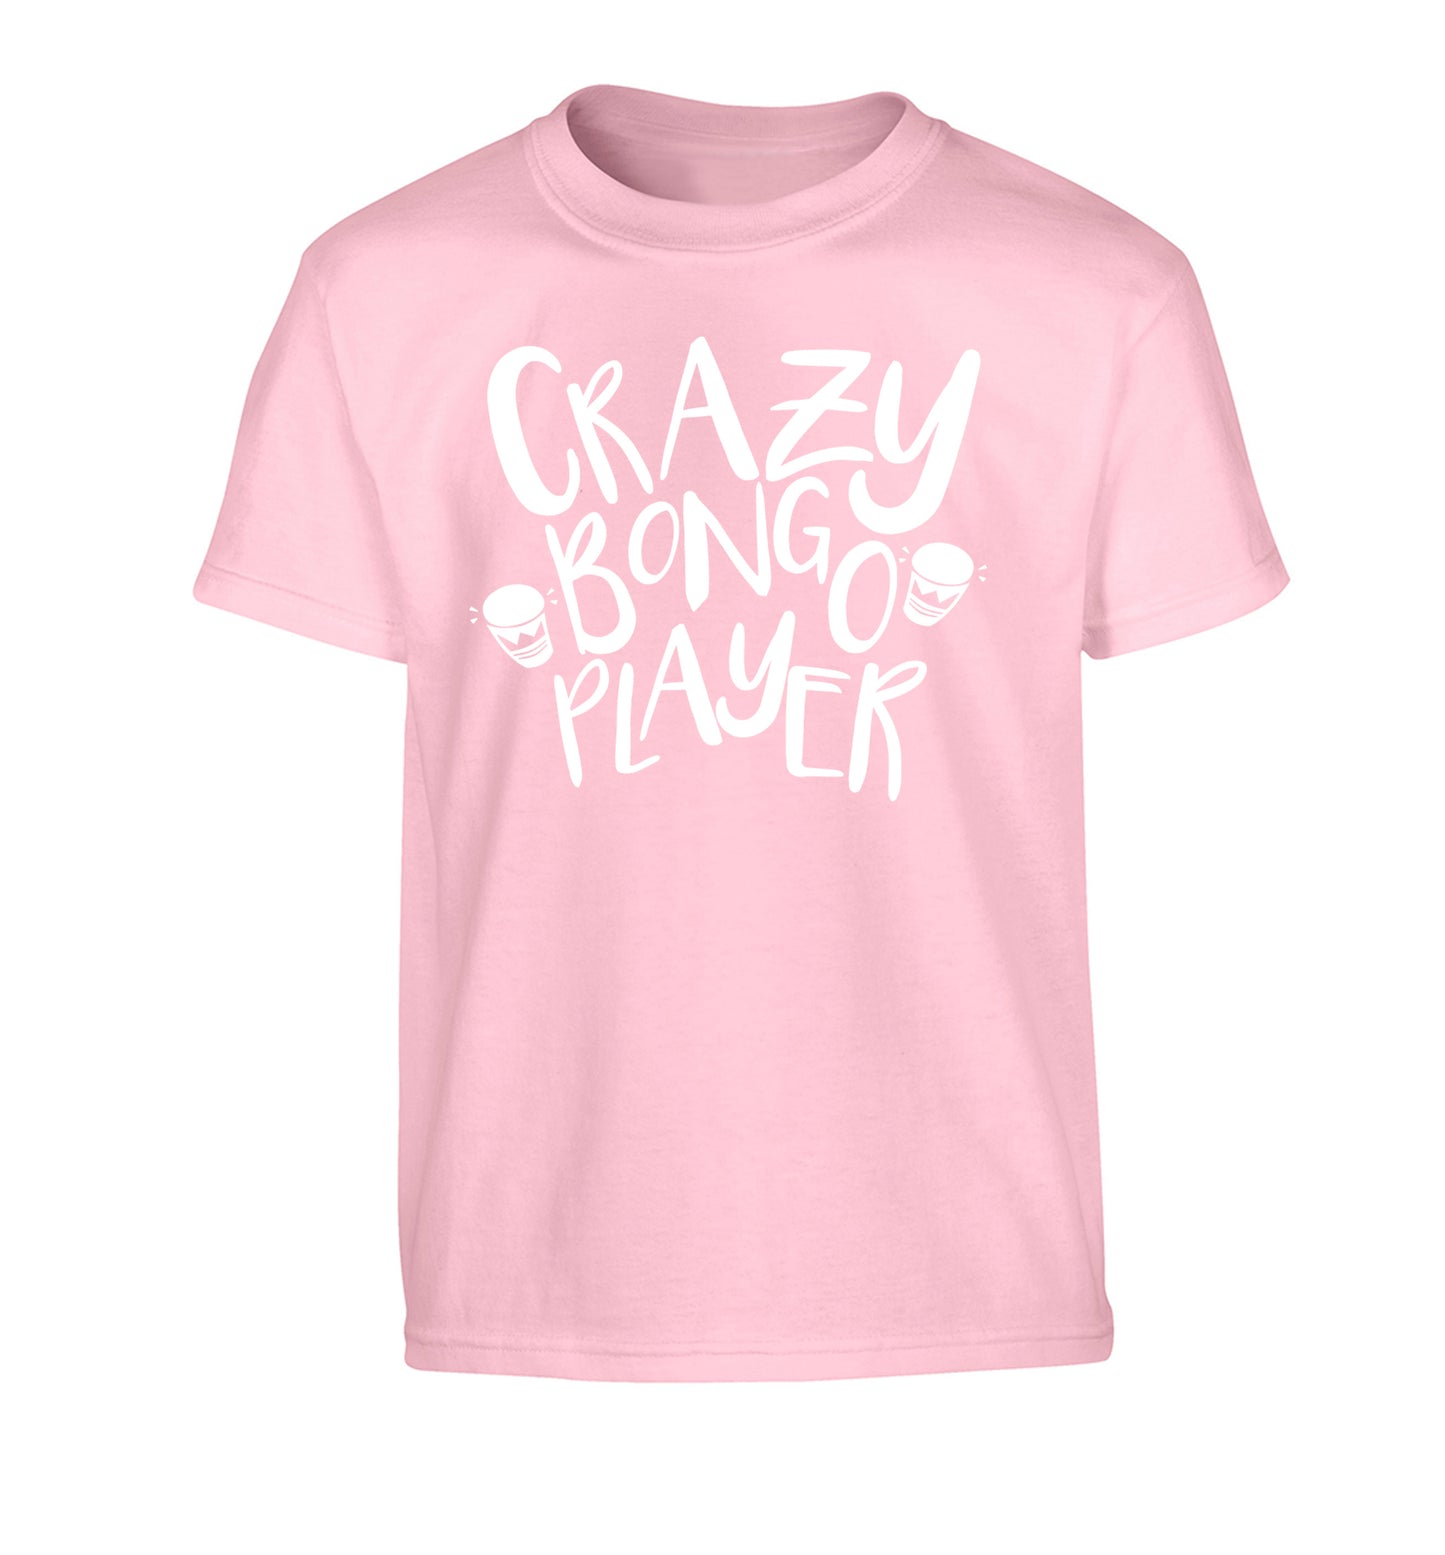 Crazy bongo player Children's light pink Tshirt 12-14 Years